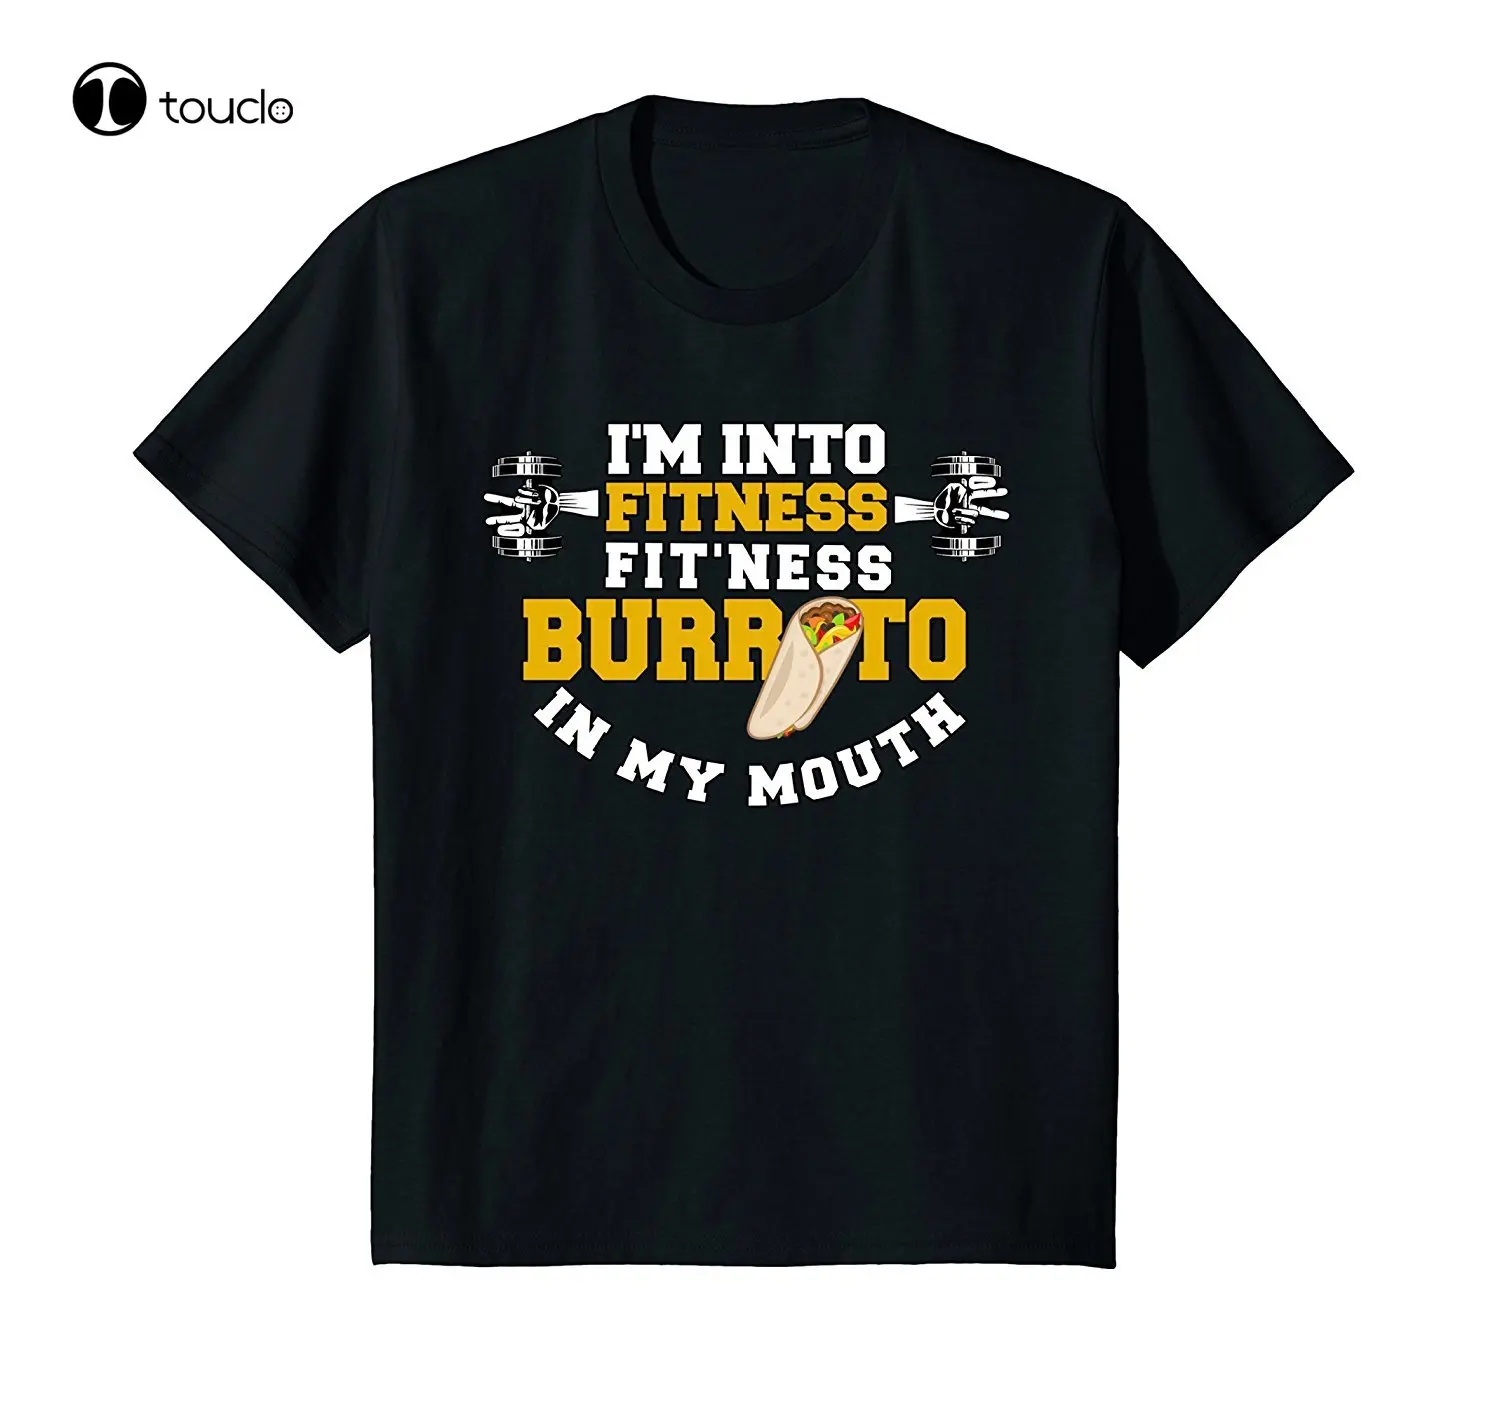 

Летняя крутая Мужская футболка «Я В фитнесе», футболка Burrito, милая забавная тренировочная футболка для спортзала, забавная футболка на заказ, Подростковая унисекс футболка